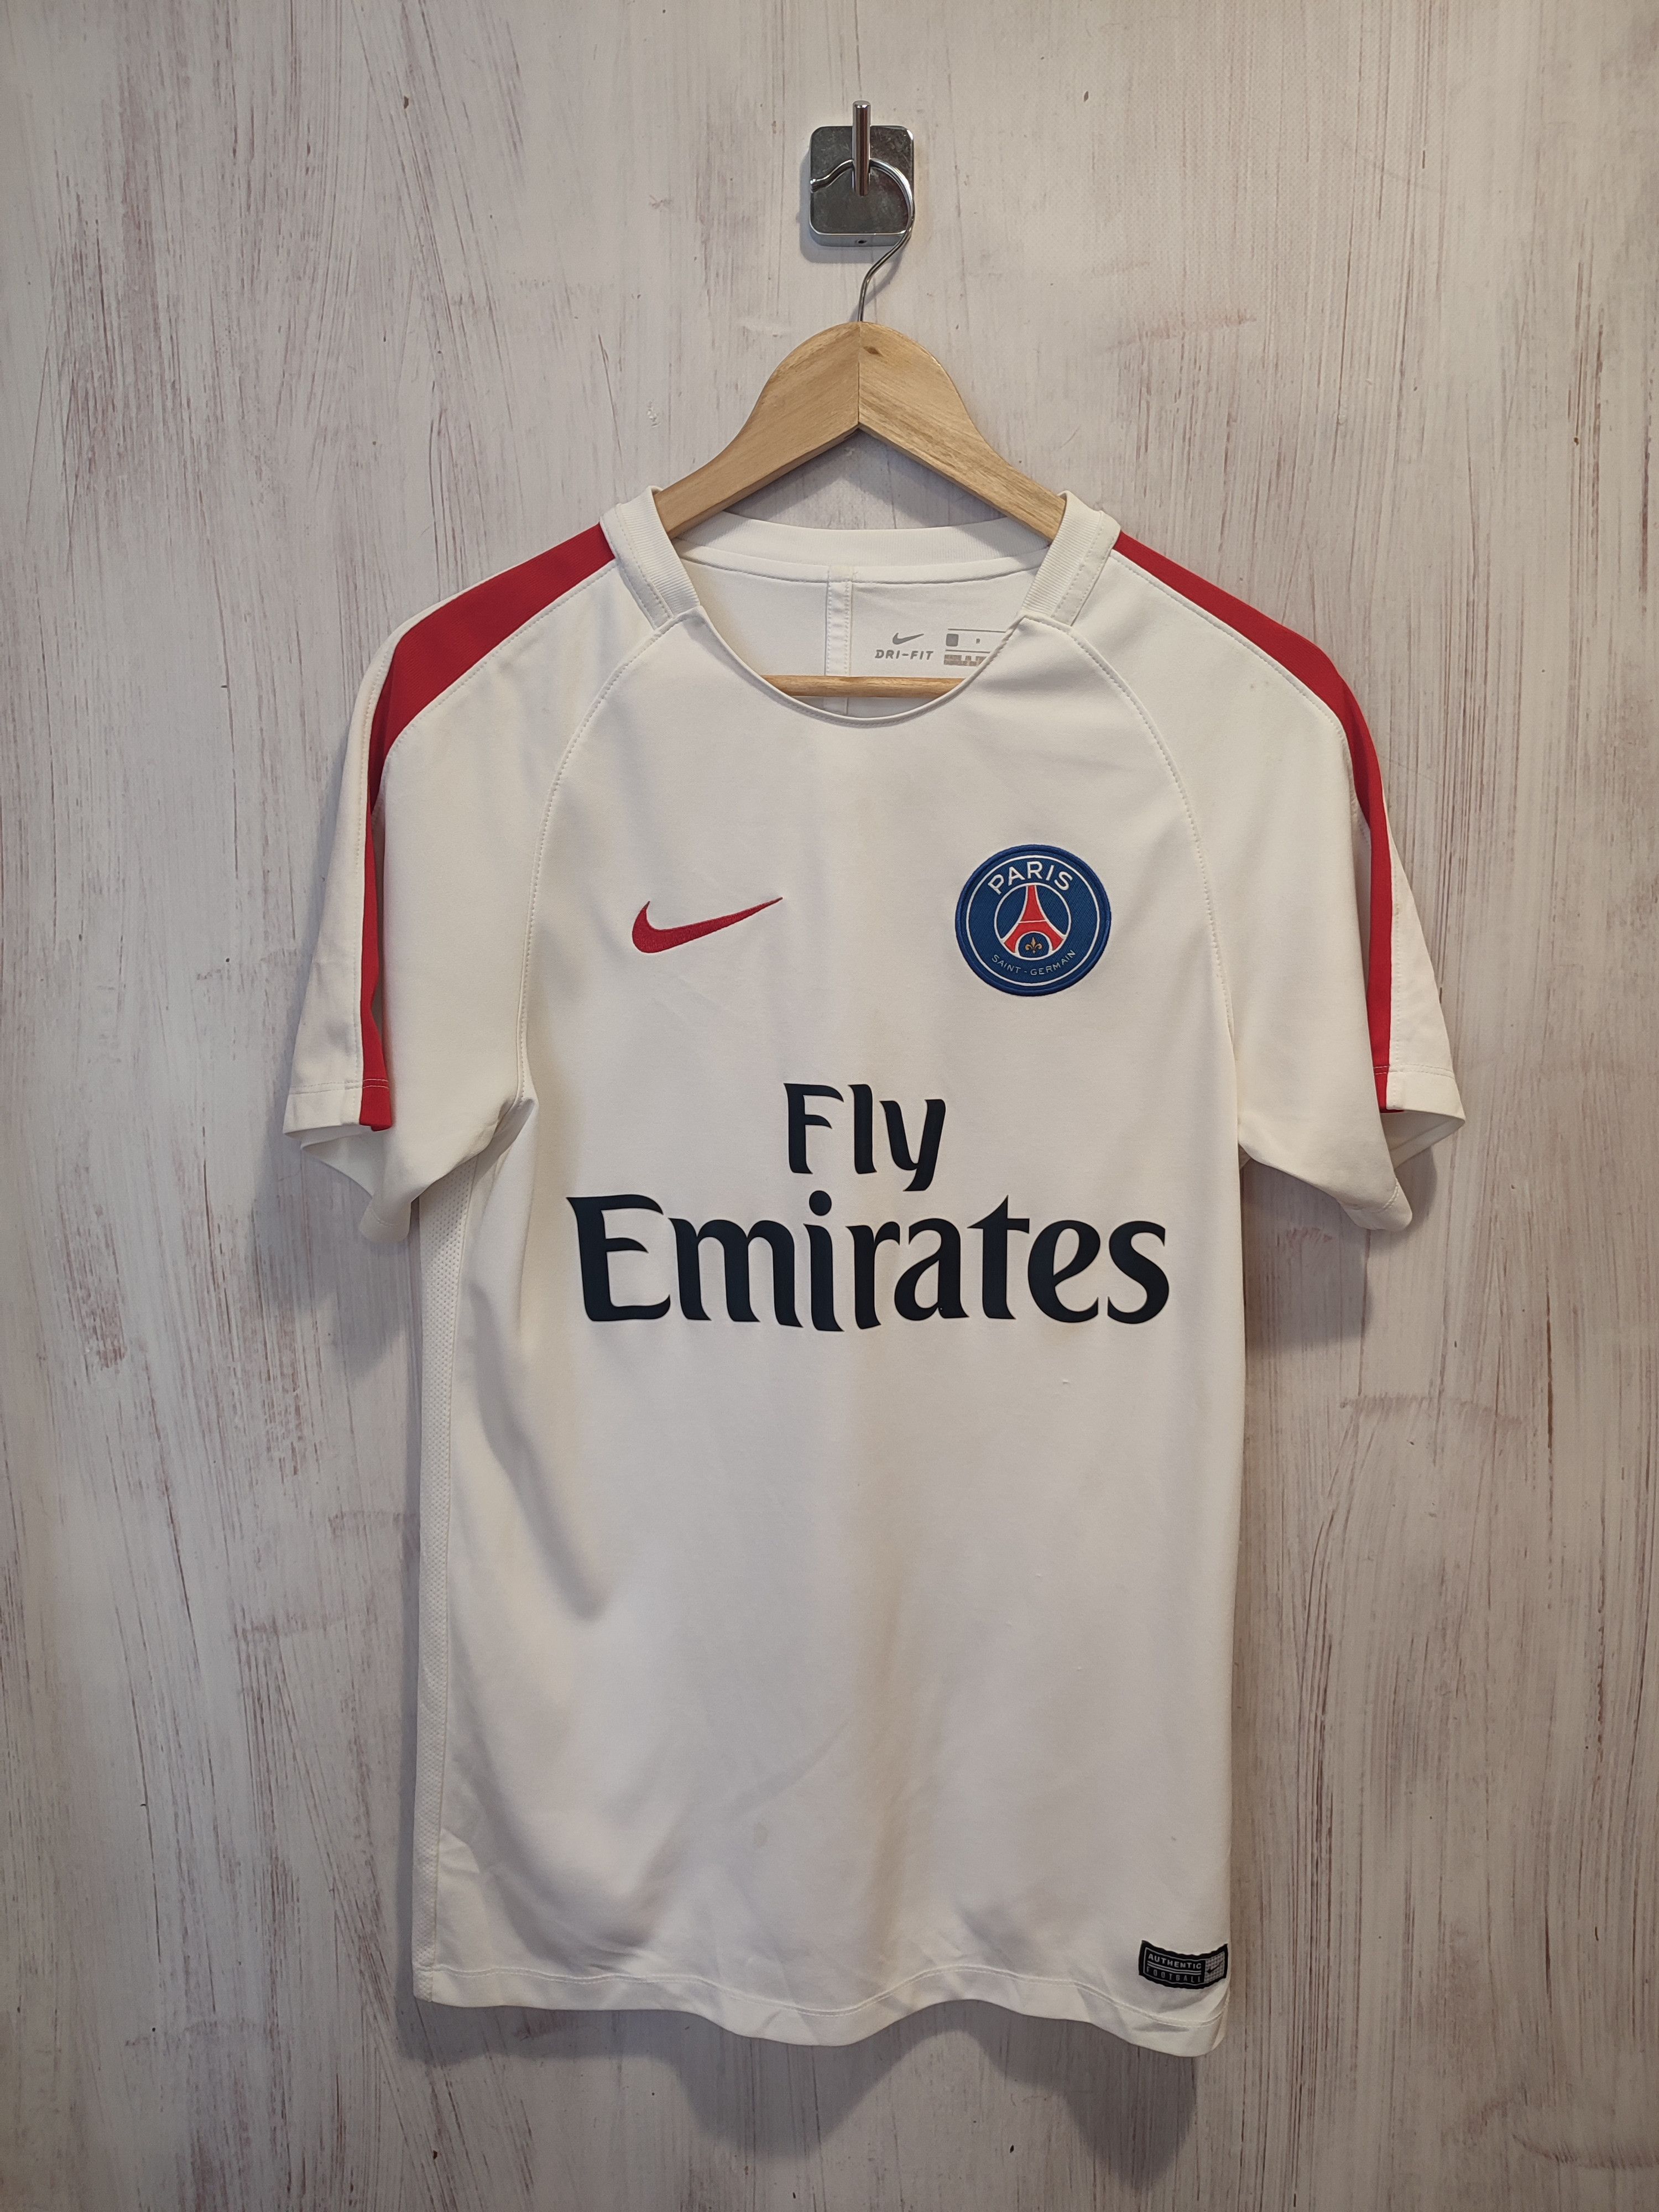 Maillot Nike football PSG Paris Saint Germain Vintage 2006/07 - XL